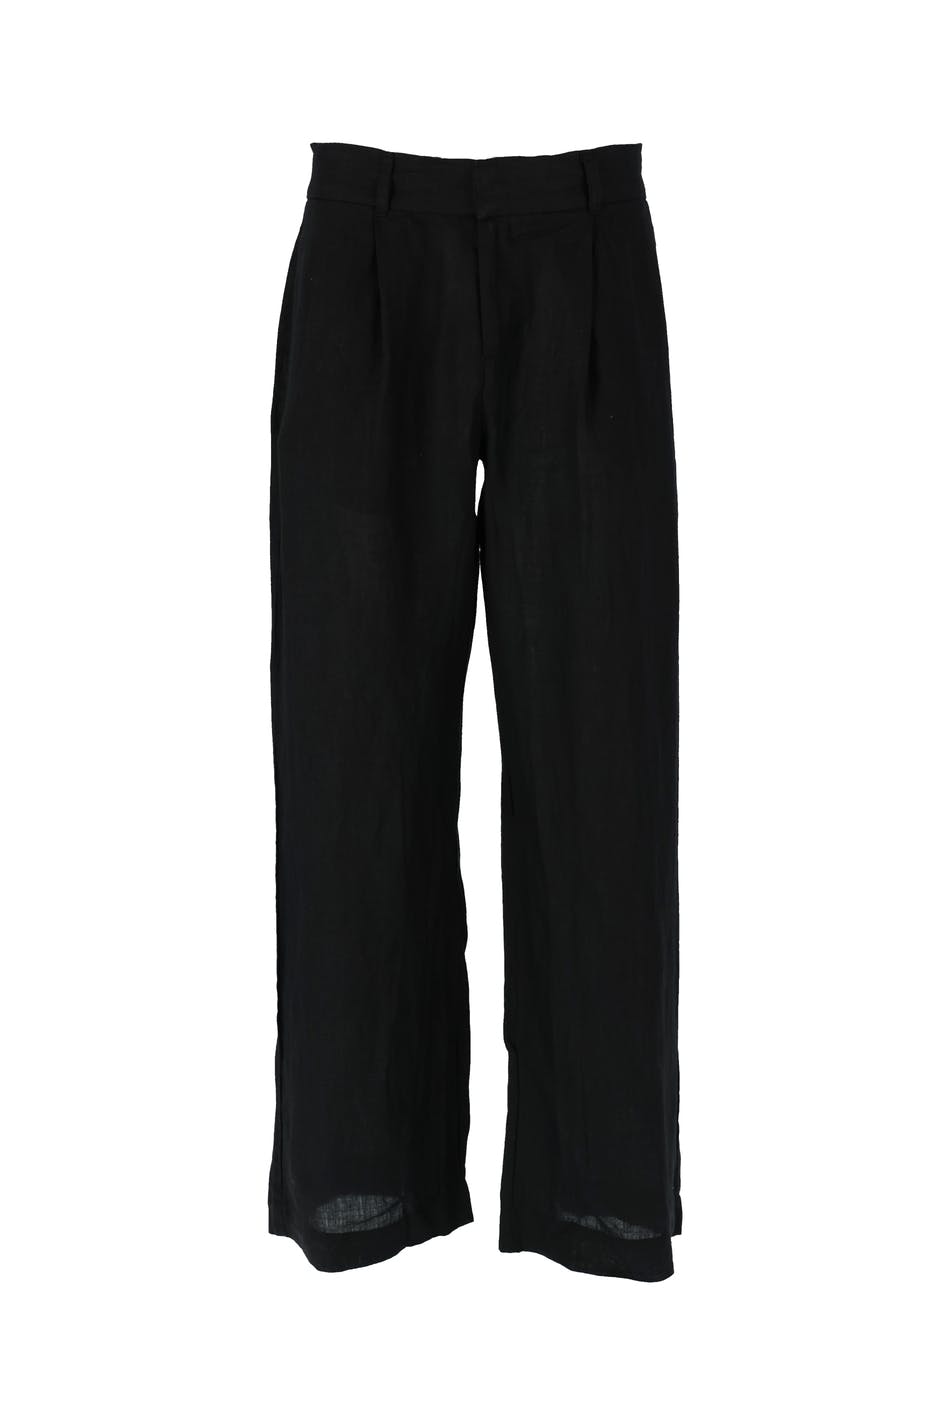 Gina Tricot - Petite linen trousers - linnebyxor - Black - XL - Female